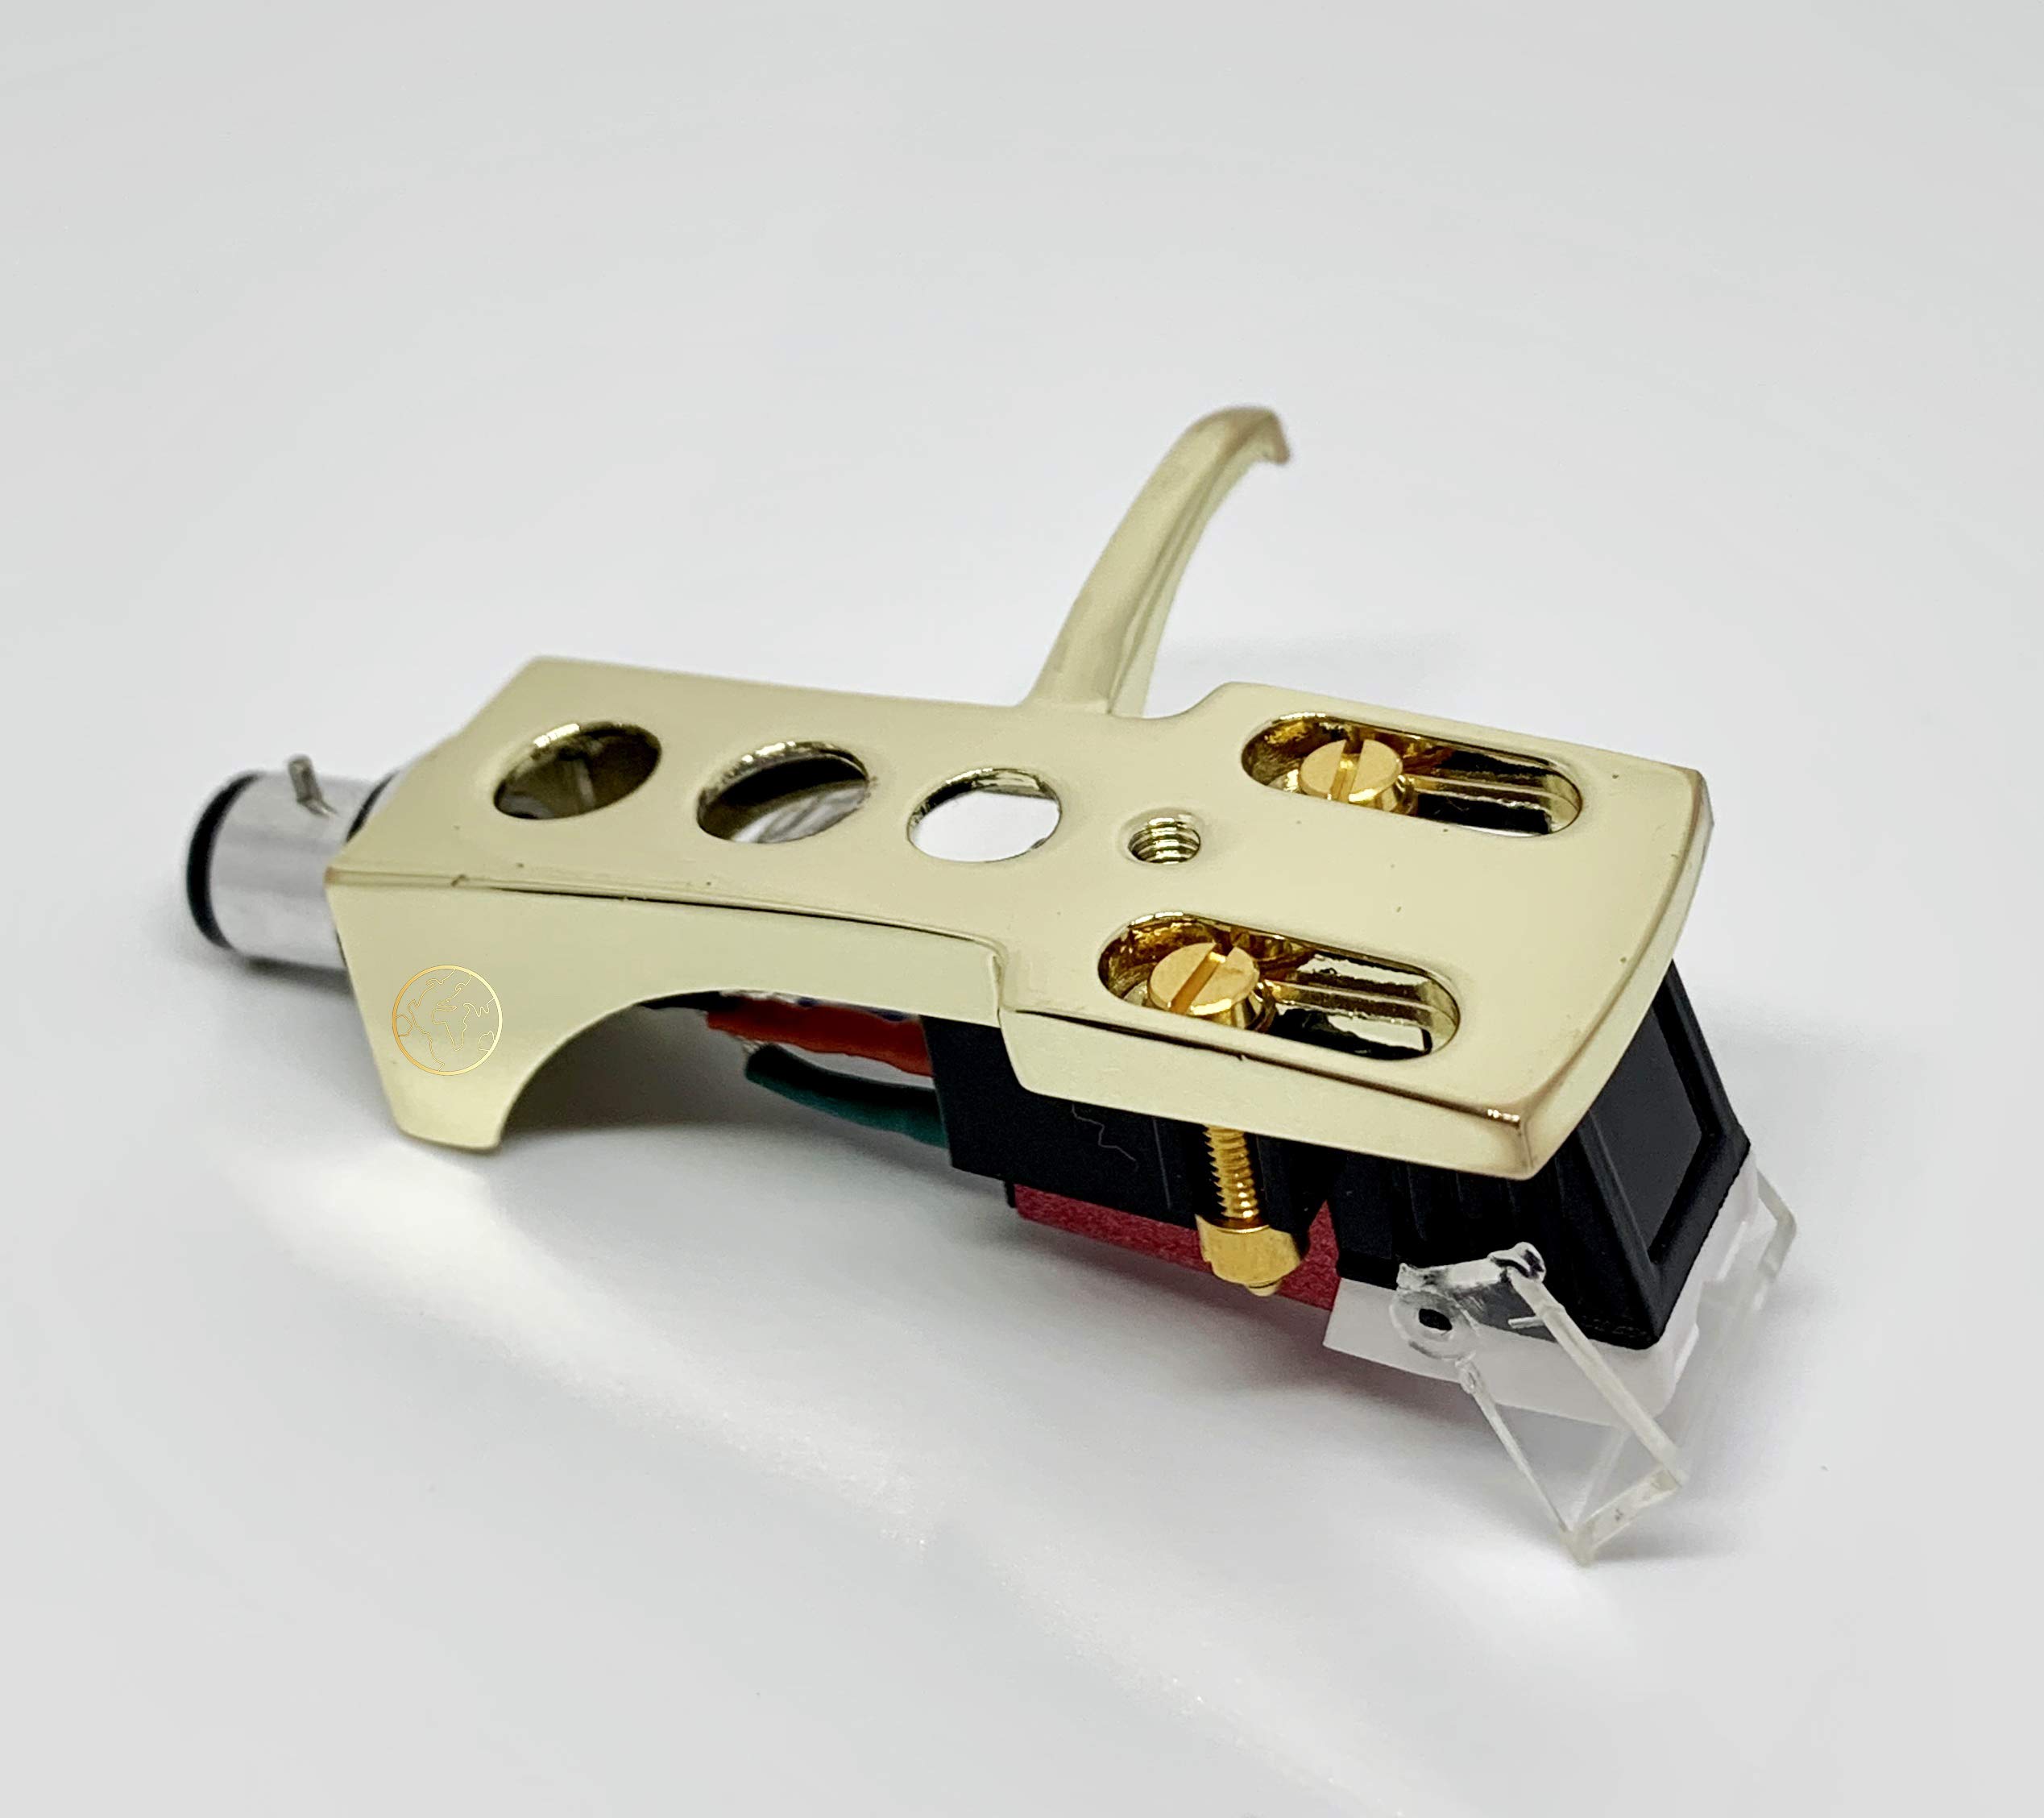 Cartridge and Stylus, needle and Gold Headshell with mounting bolts for Pioneer PL50, PL518, PL512, PL530, PL630, PLA45D, PLA35, PL516, PL88FS, PL61, PL600, X1300, PL335, PL120, PL30, PL320